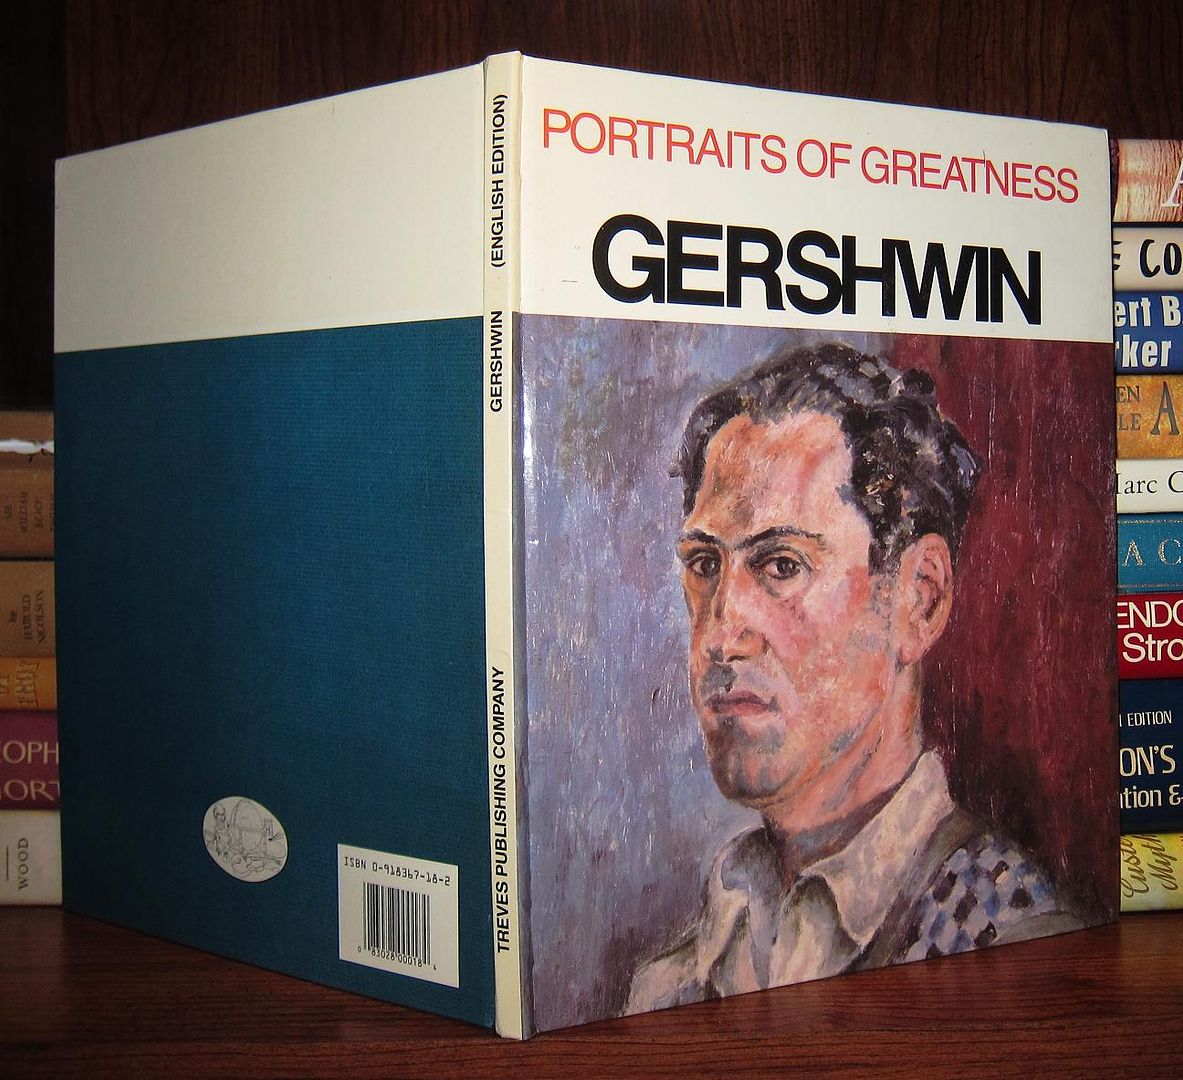 SANTIS, FLORENCE STEVENSON DE - GERSHWIN - Portraits of Greatness Gershwin